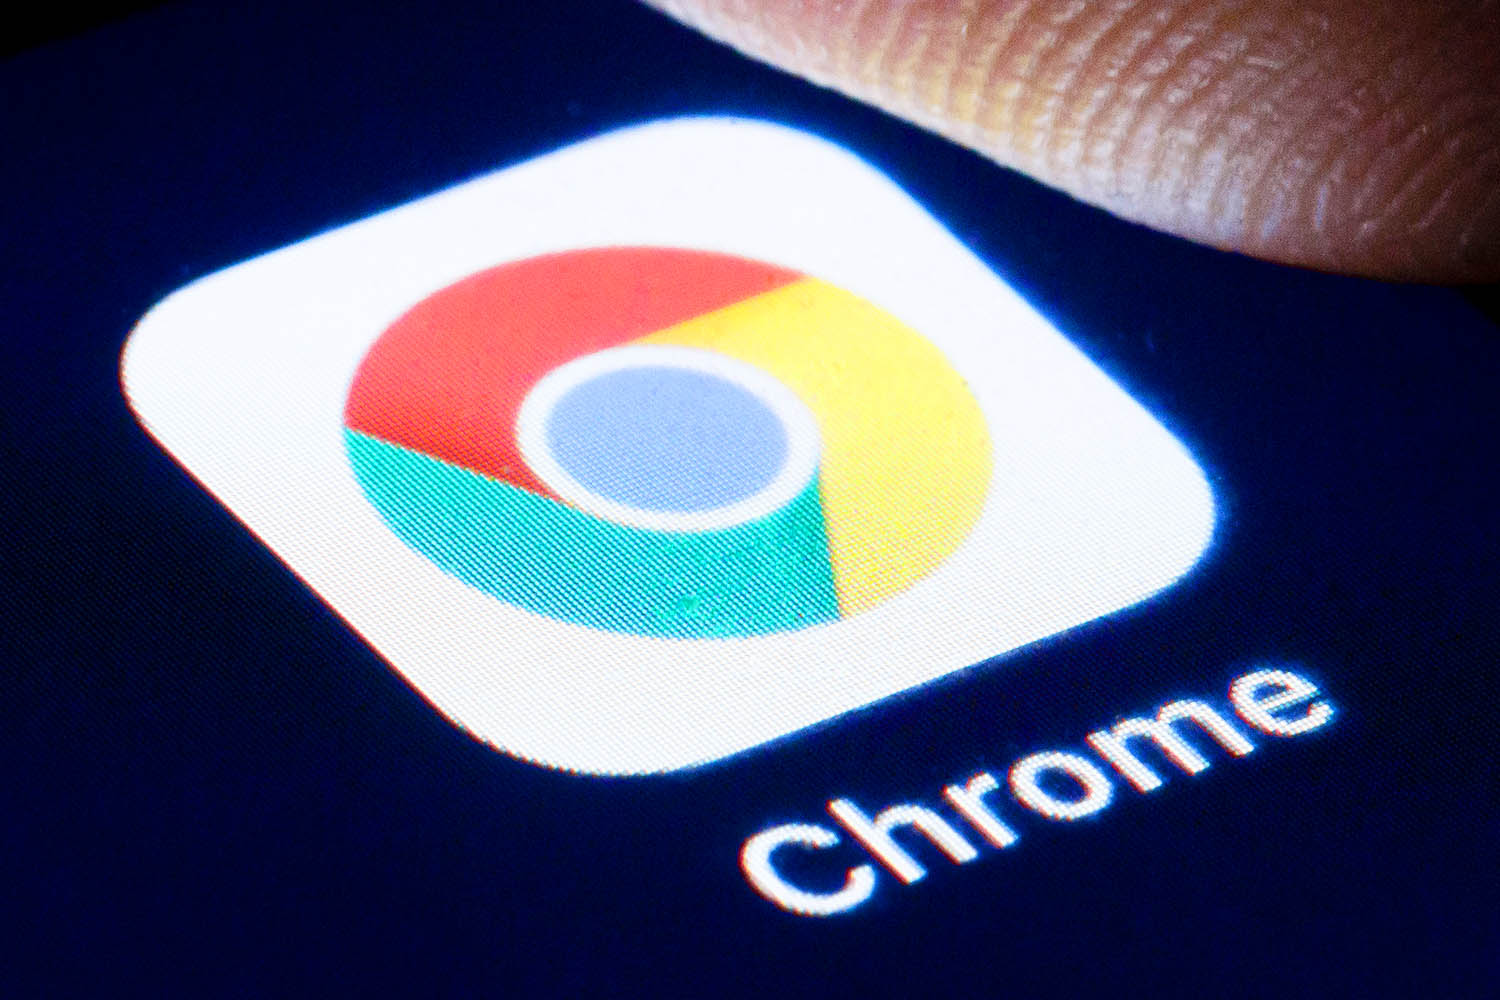 Google Chrome launches "minimized custom tabs" feature